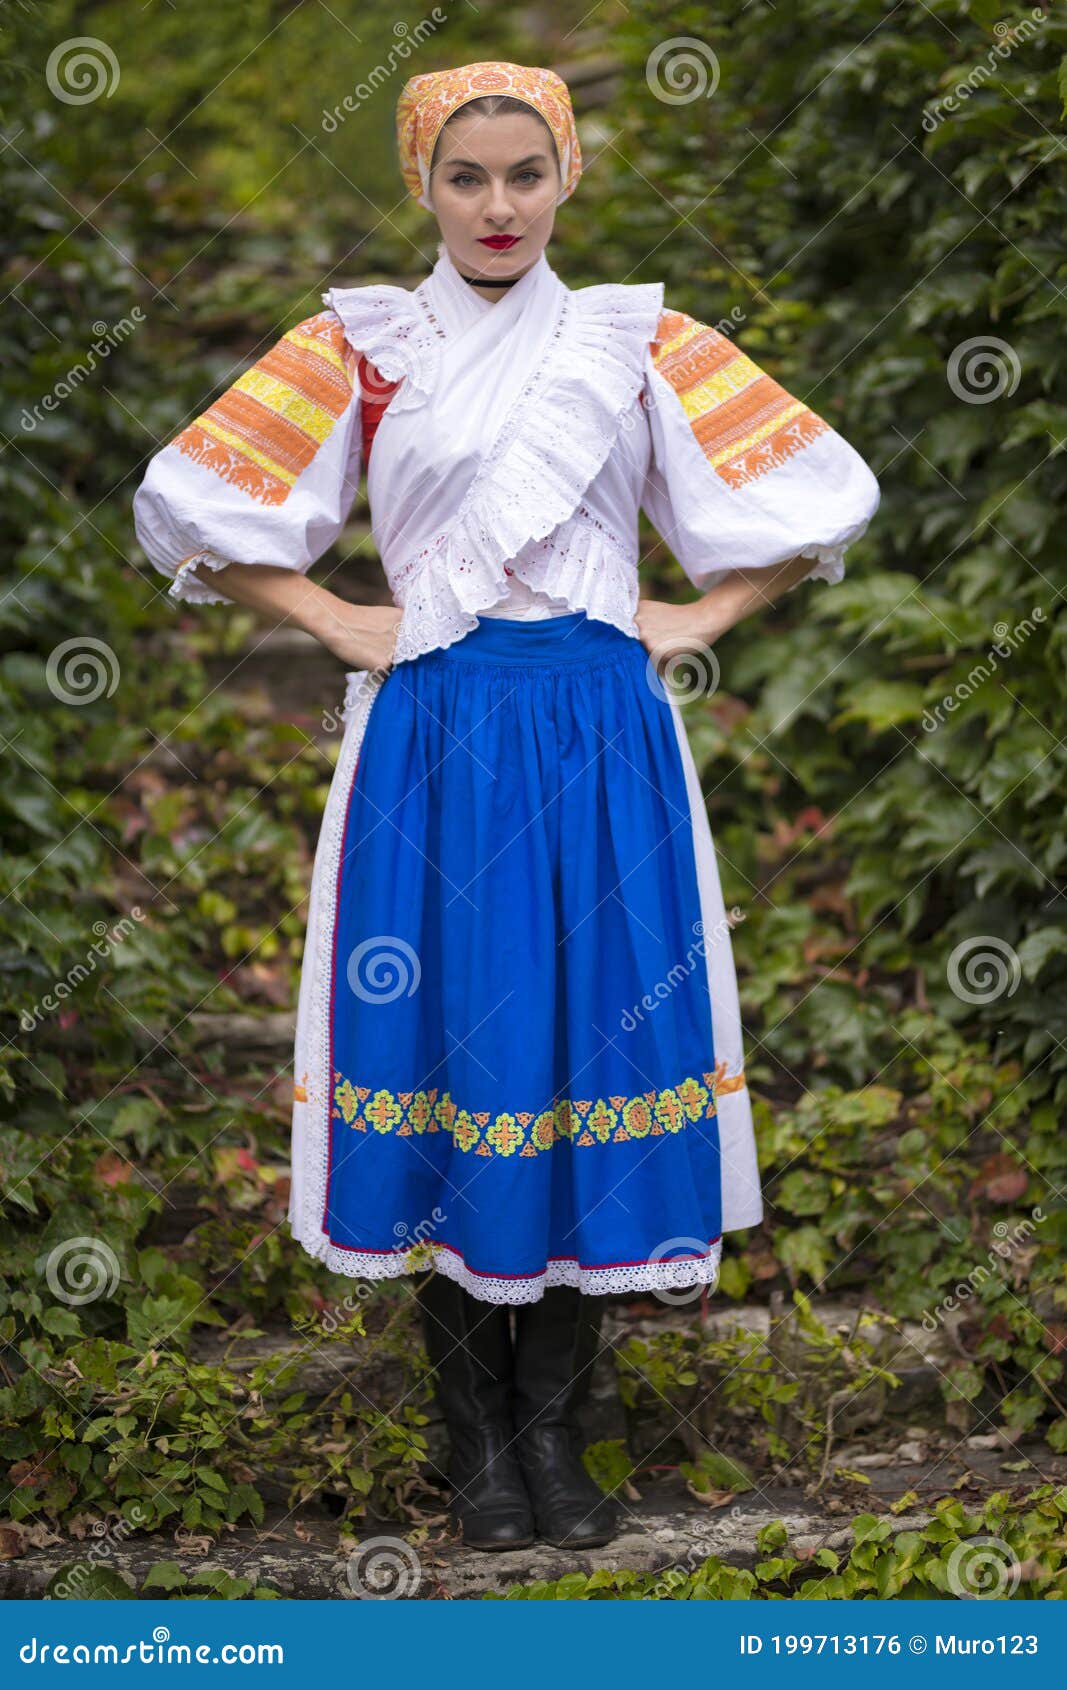 Girl in Slovak folk dress stock photo. Image of expression - 199713176